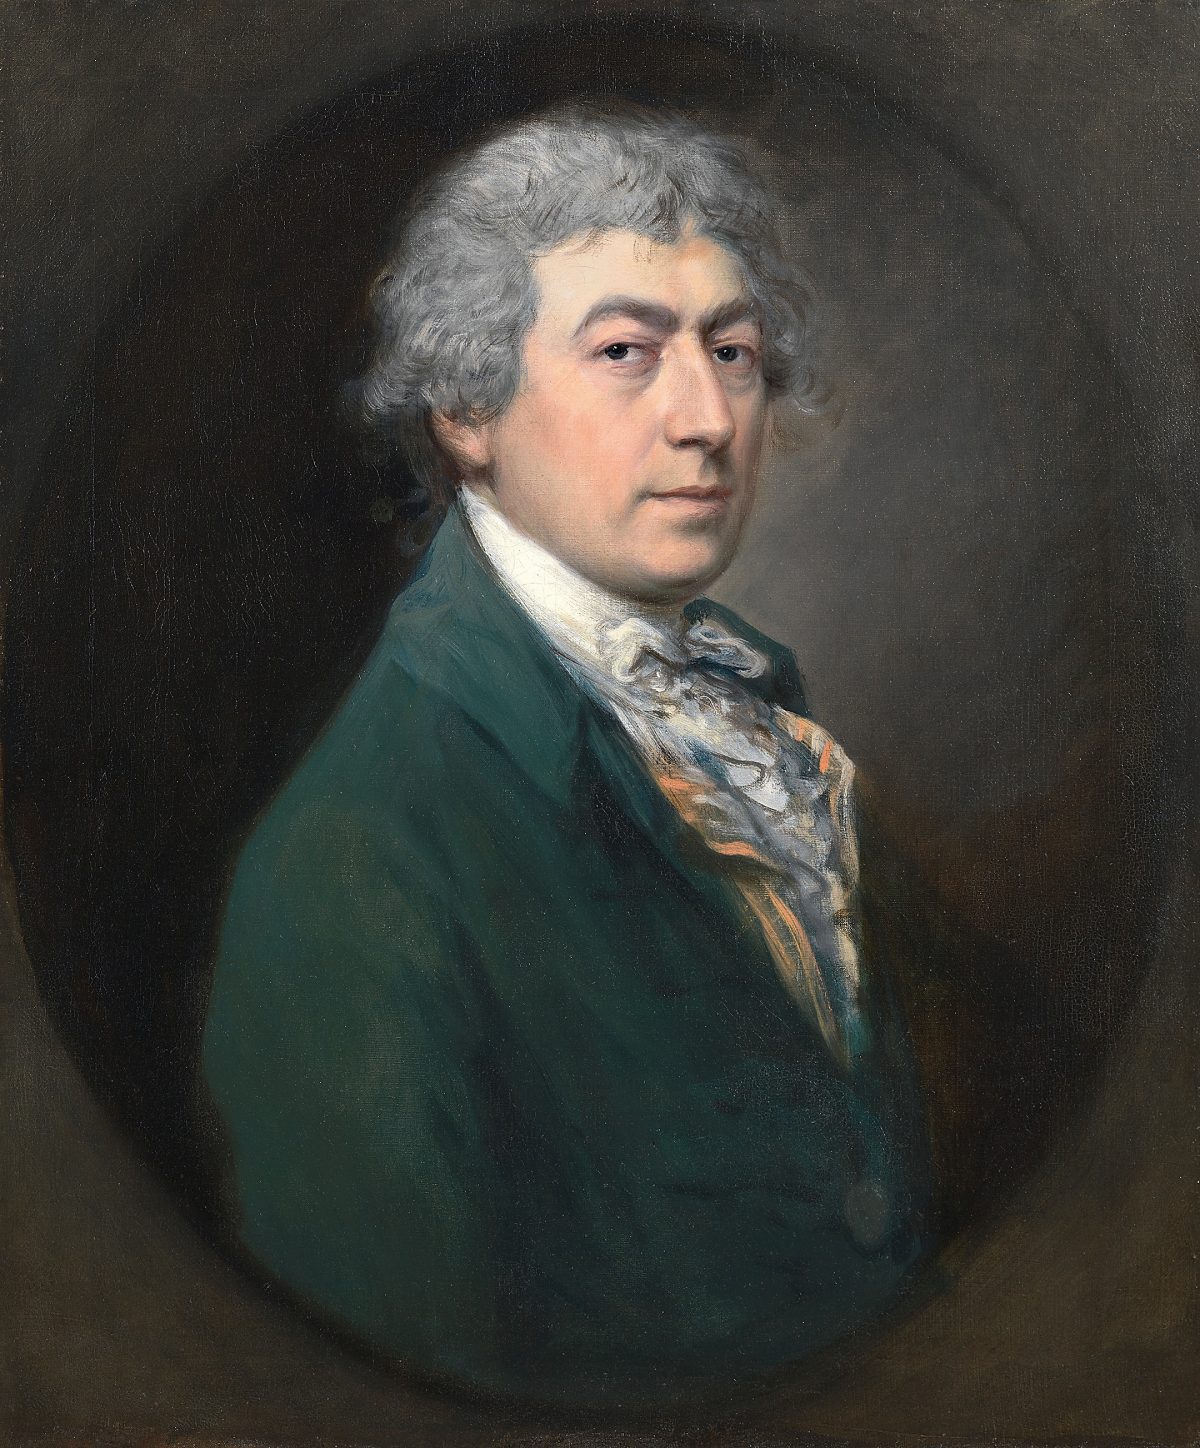 Portrait of 18th century man Thomas Gainsborough